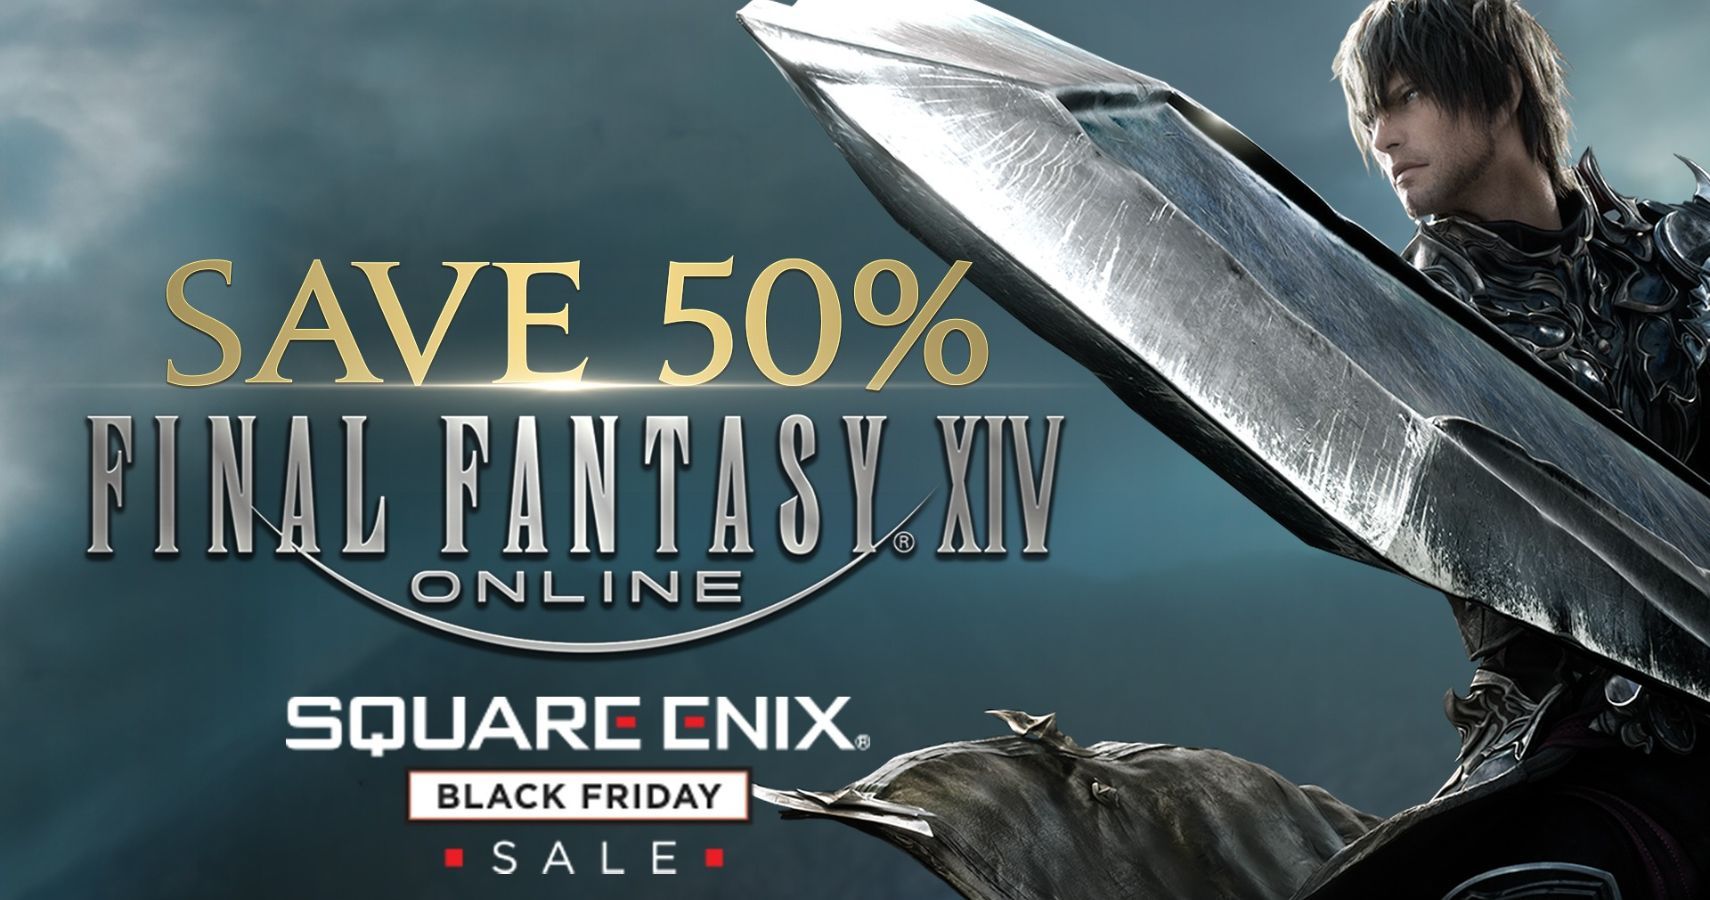 final fantasy xiv online sale